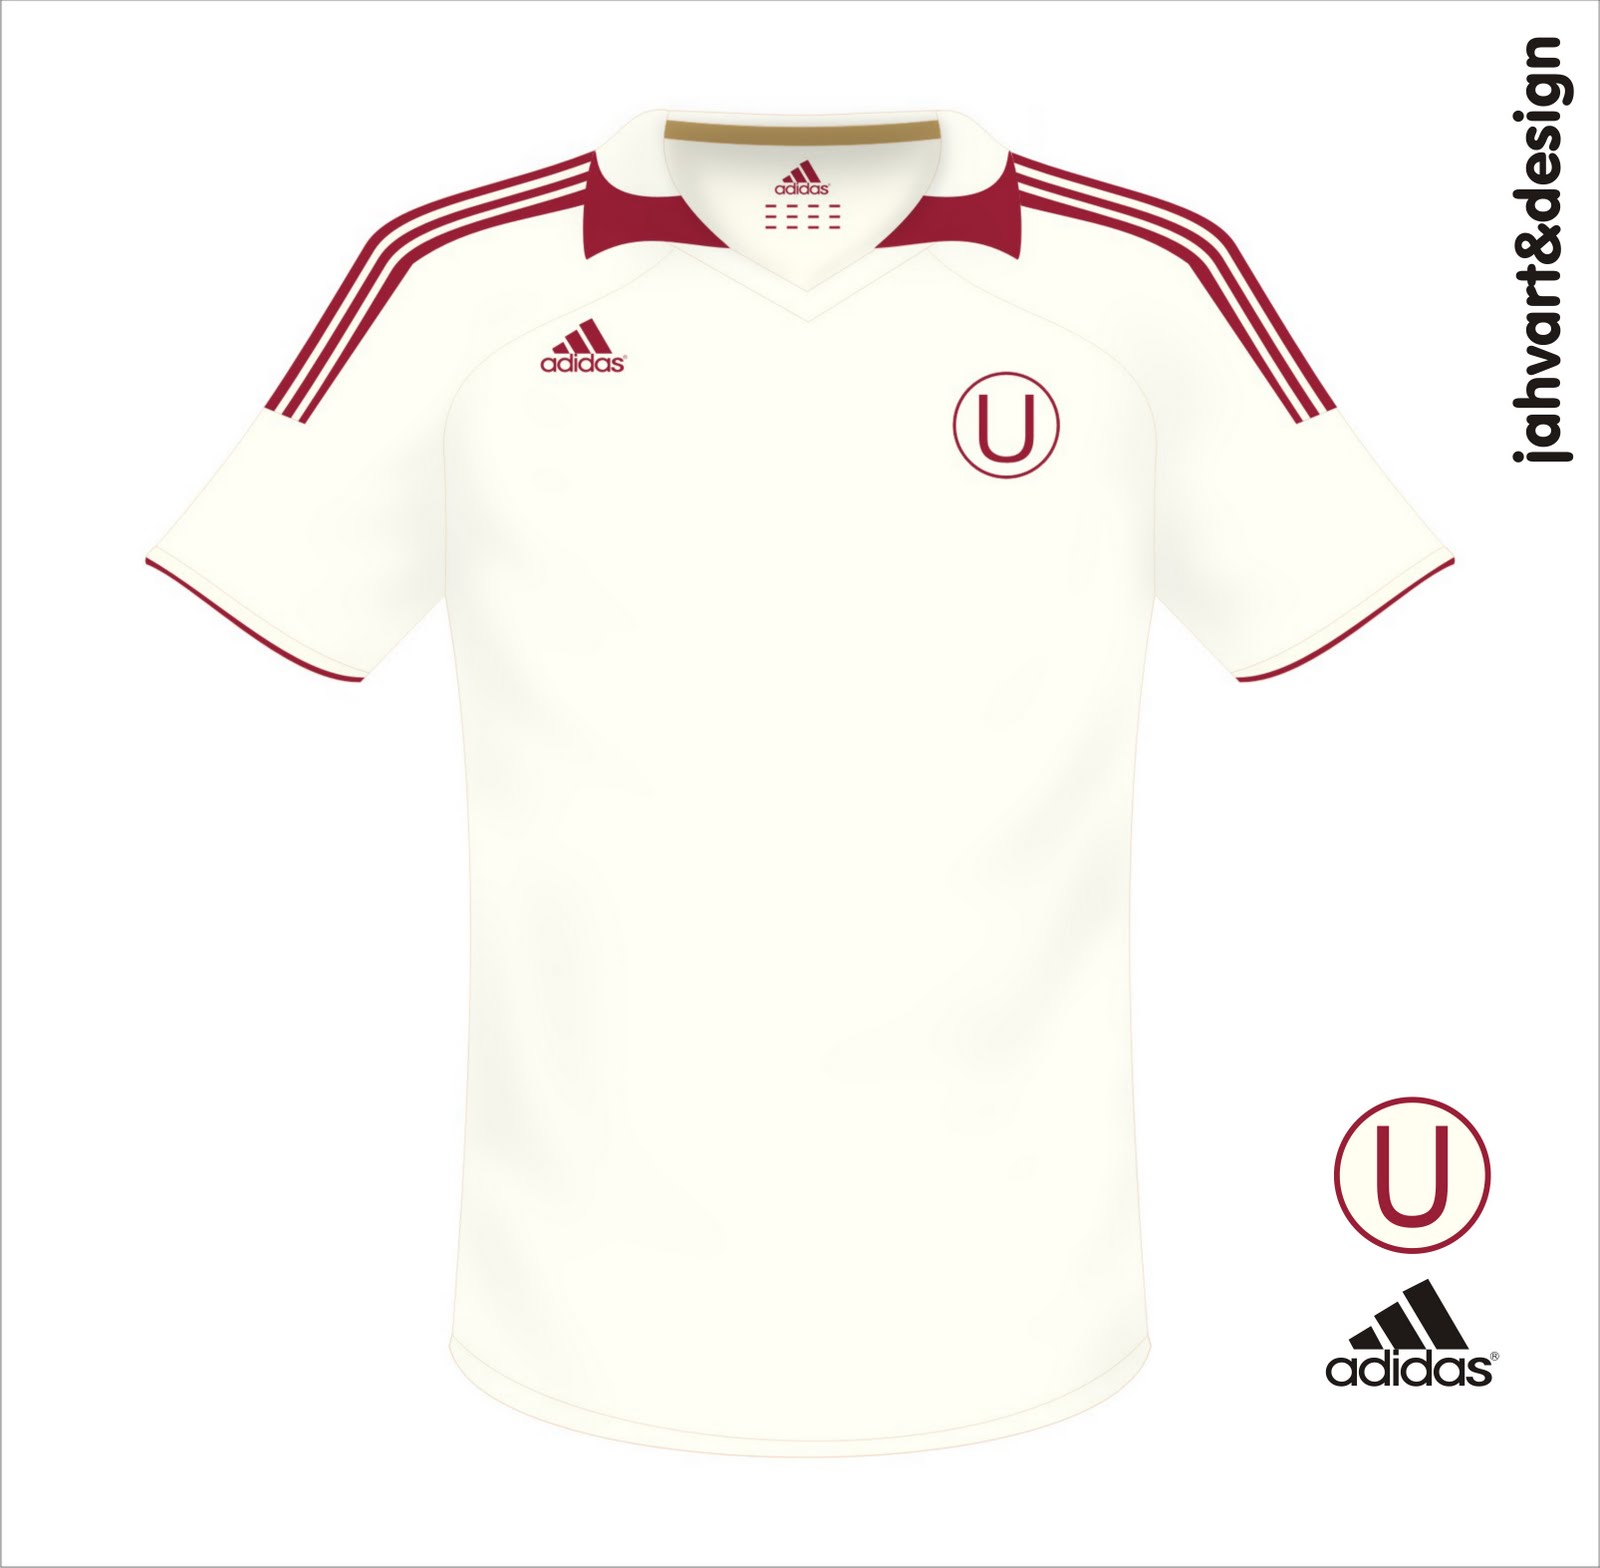 gramática Deportes Escepticismo jahv art&desing: Camiseta de Universitario de Deportes template adidas